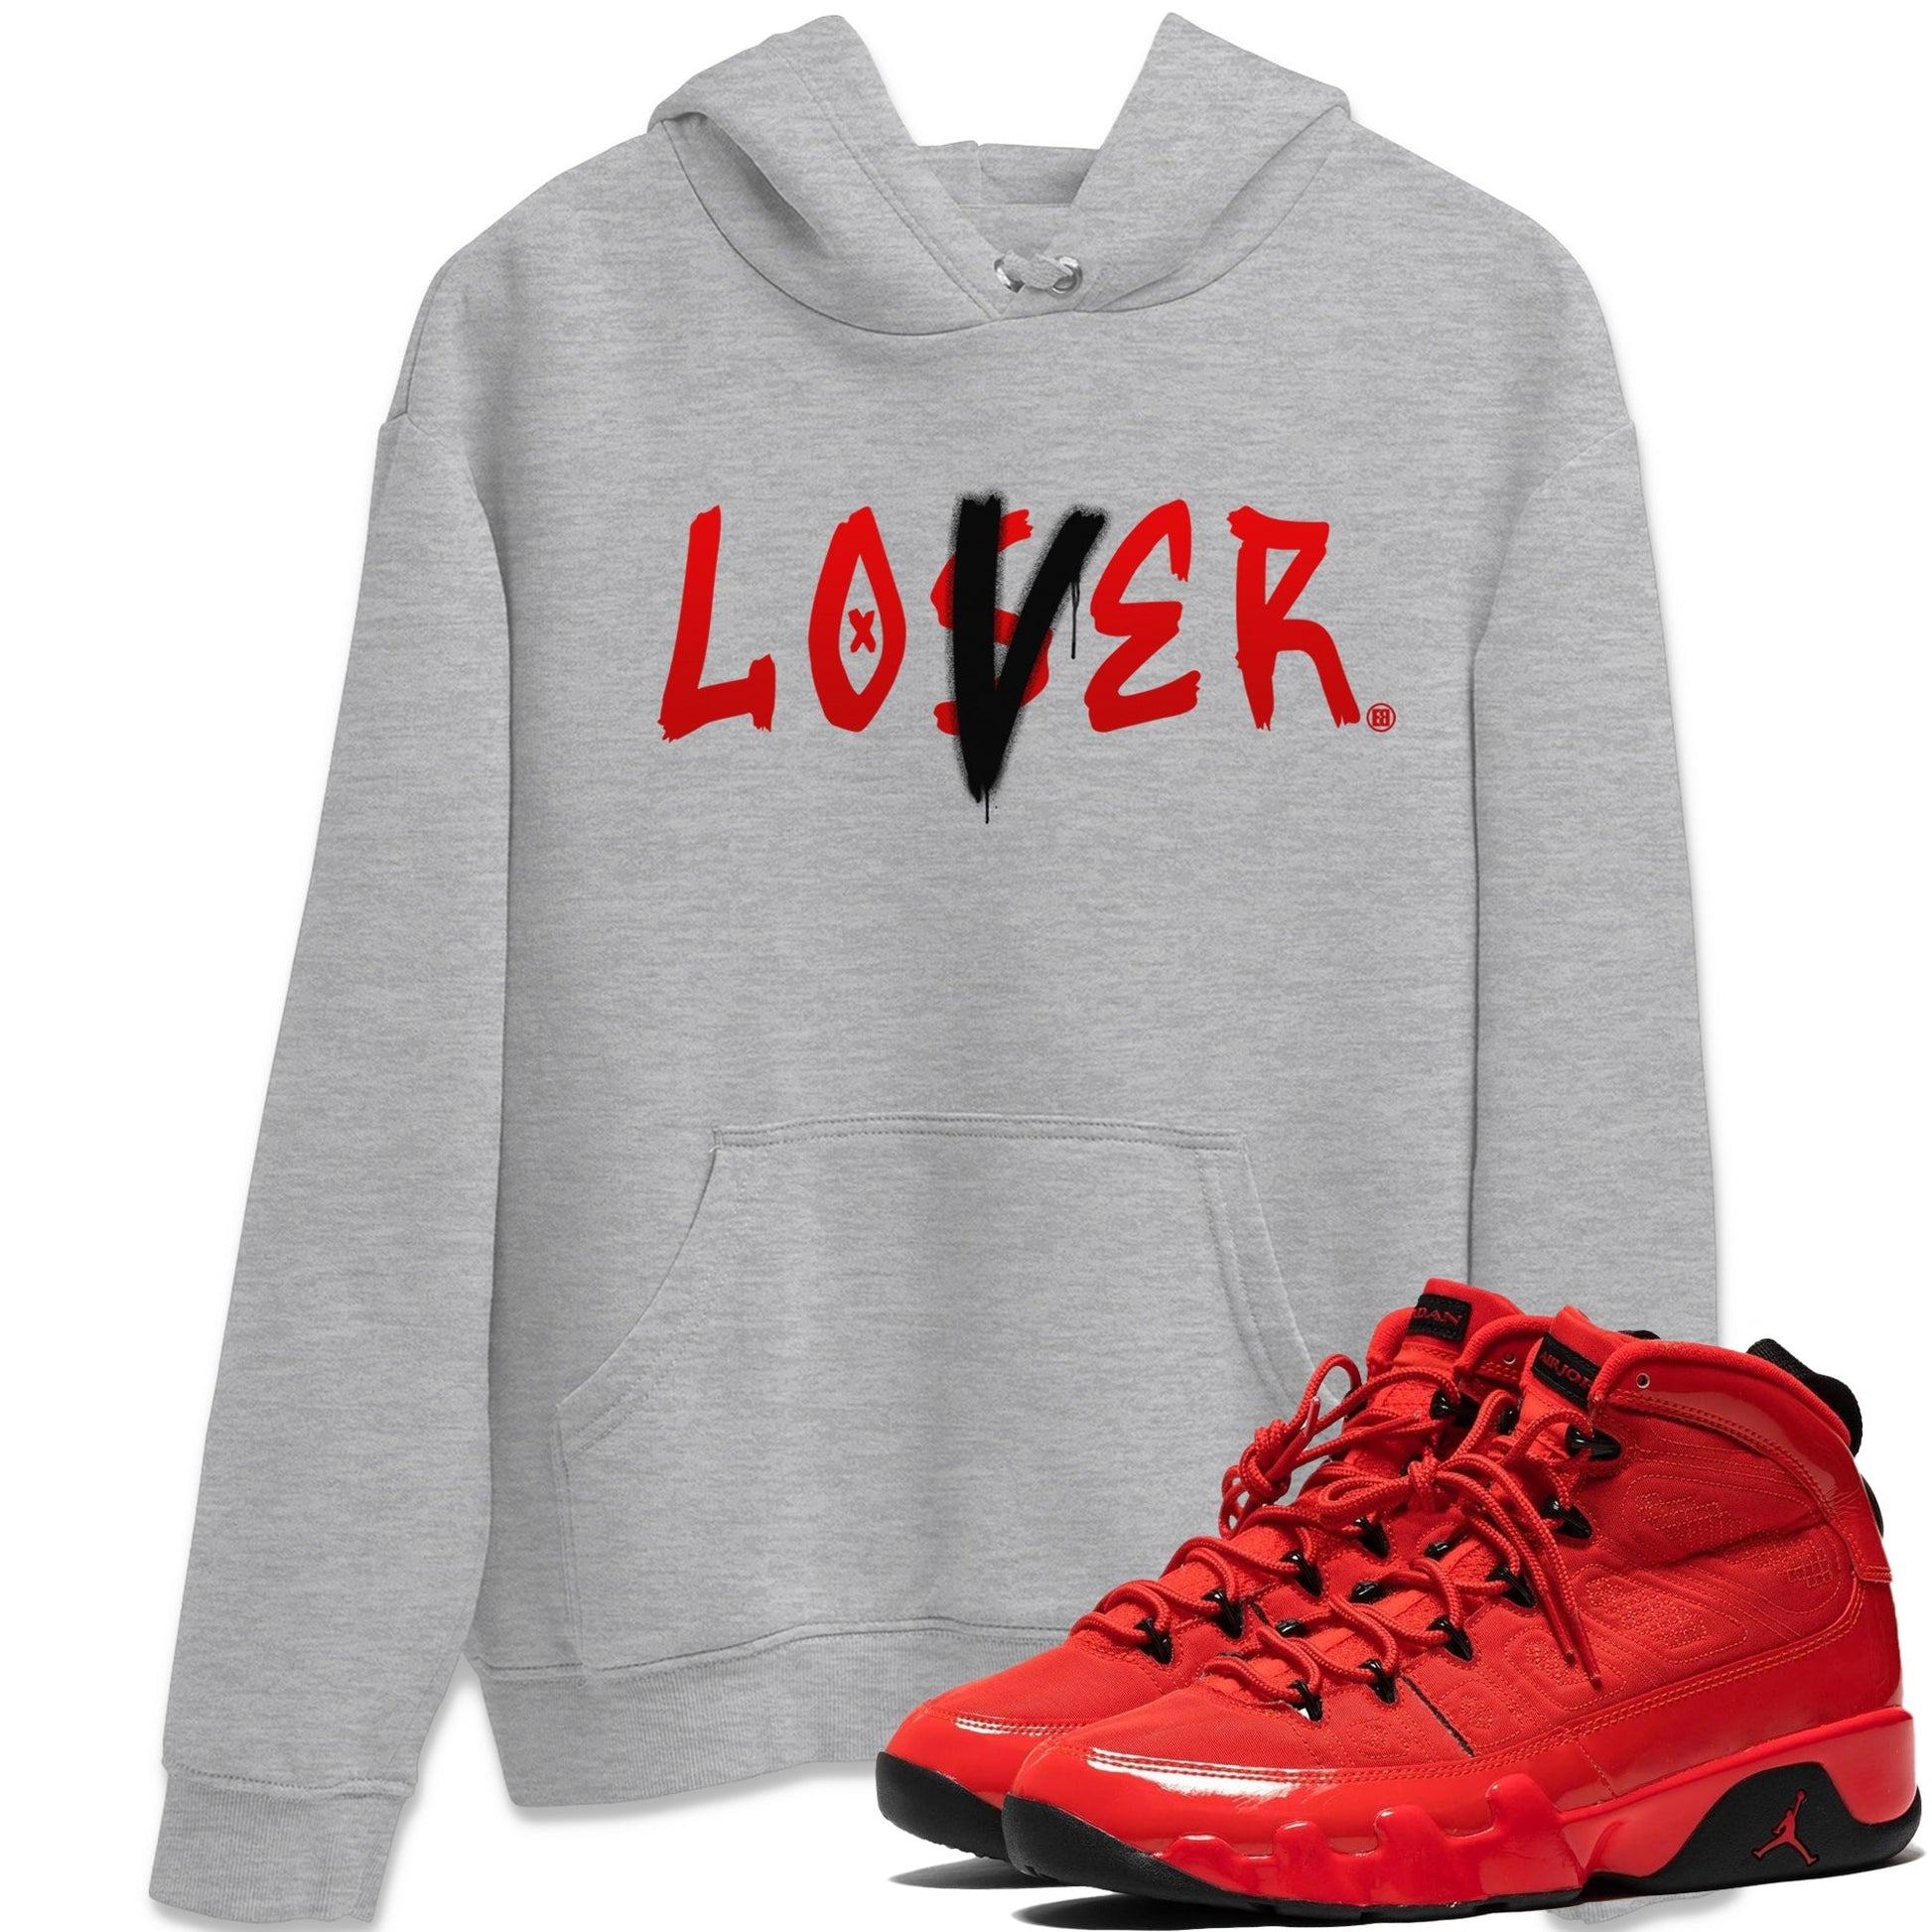 Jordan 9 Chile Red Sneaker Match Tees Loser Lover Sneaker Tees Jordan 9 Chile Red Sneaker Release Tees Unisex Shirts